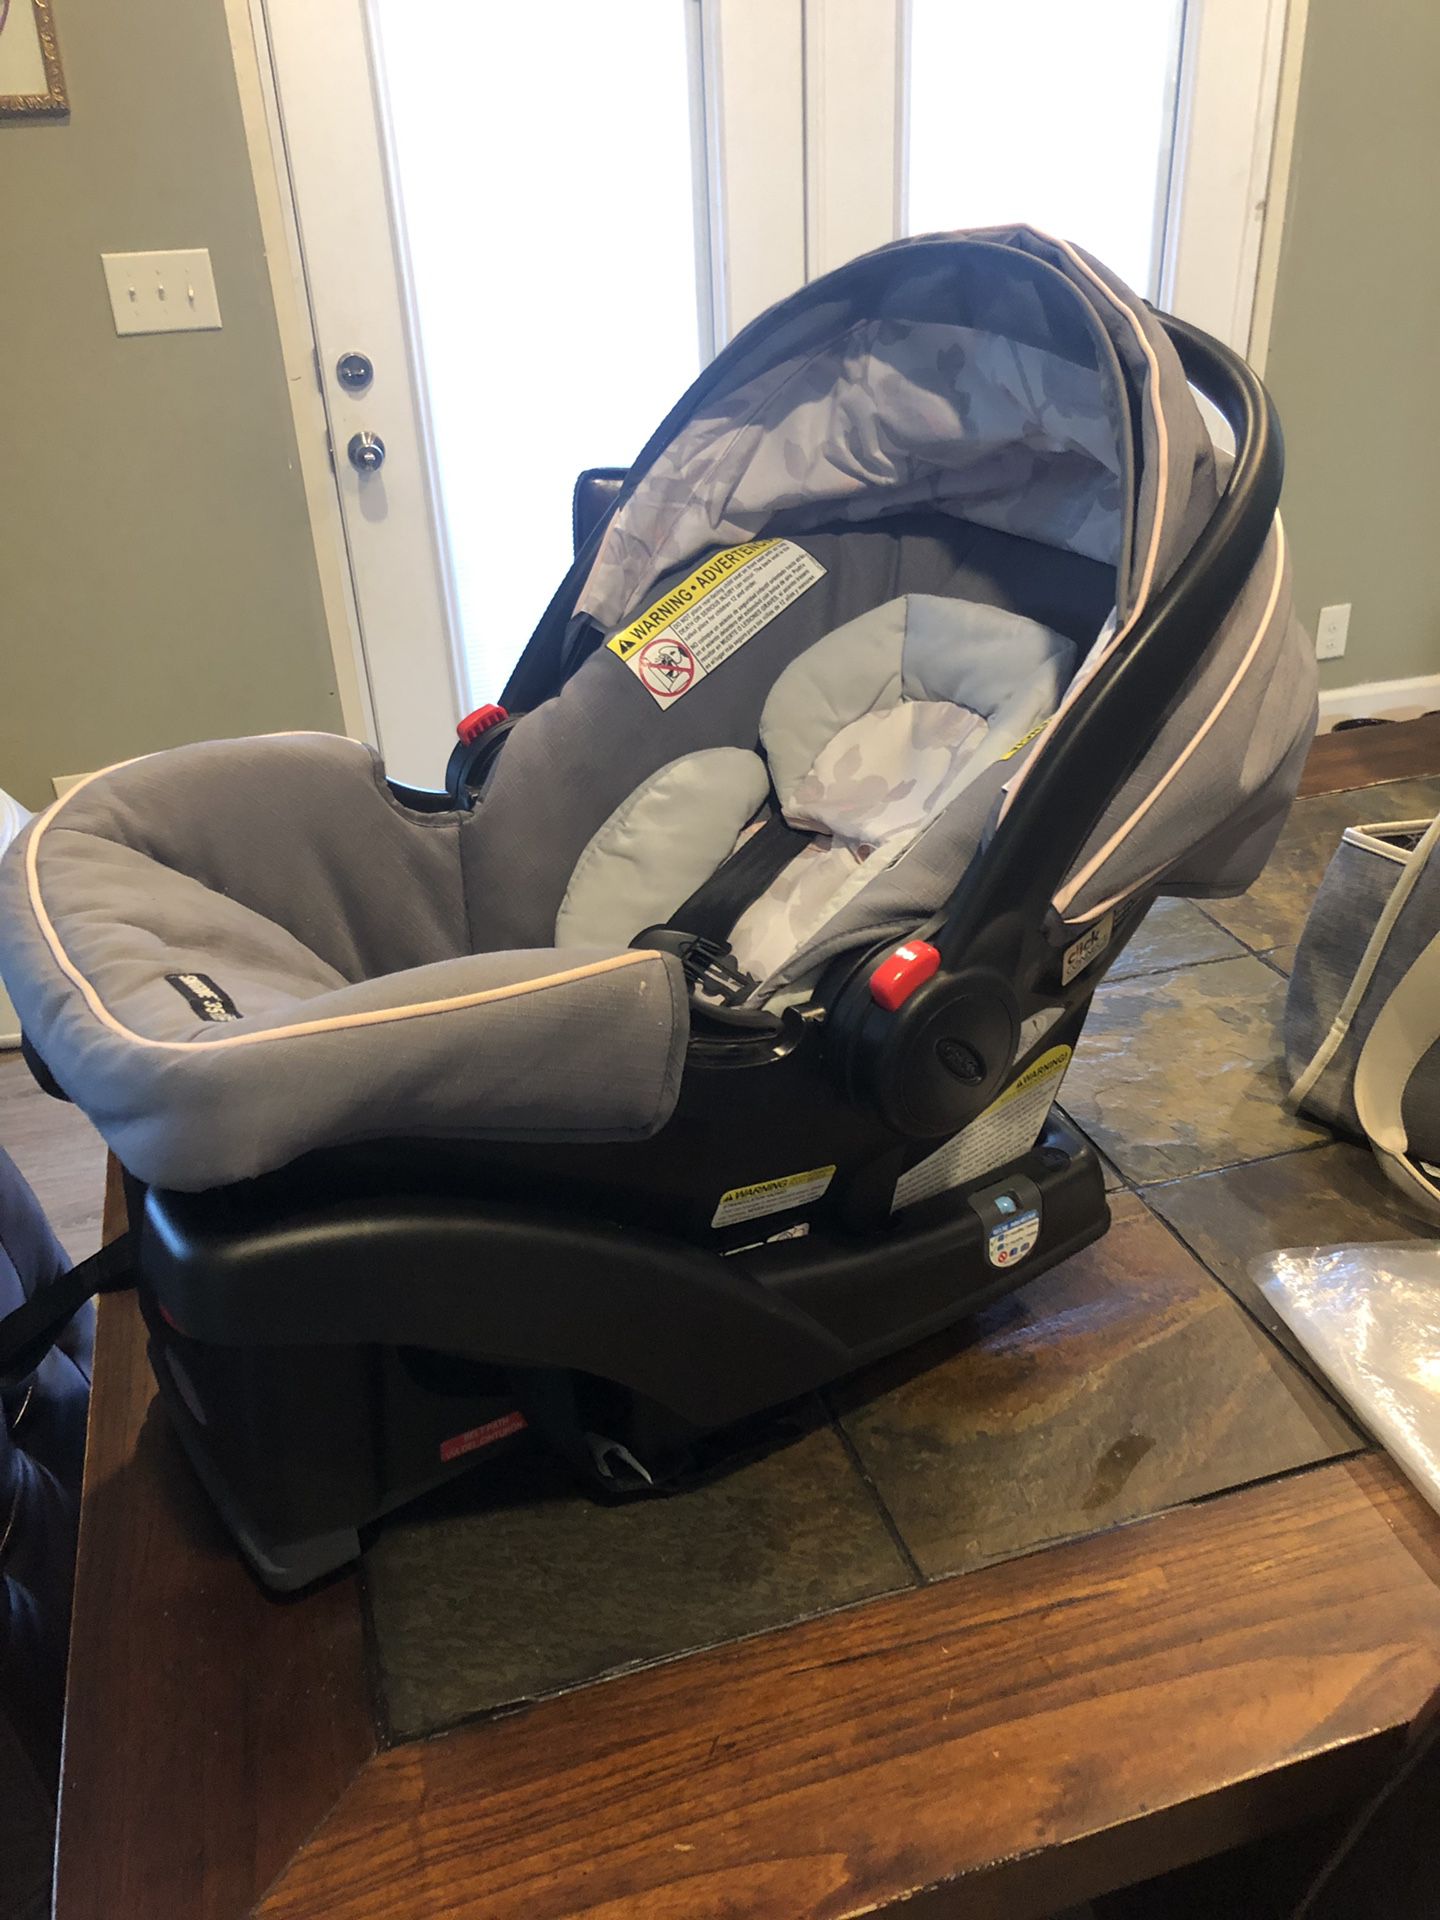 Graco Baby Car seat